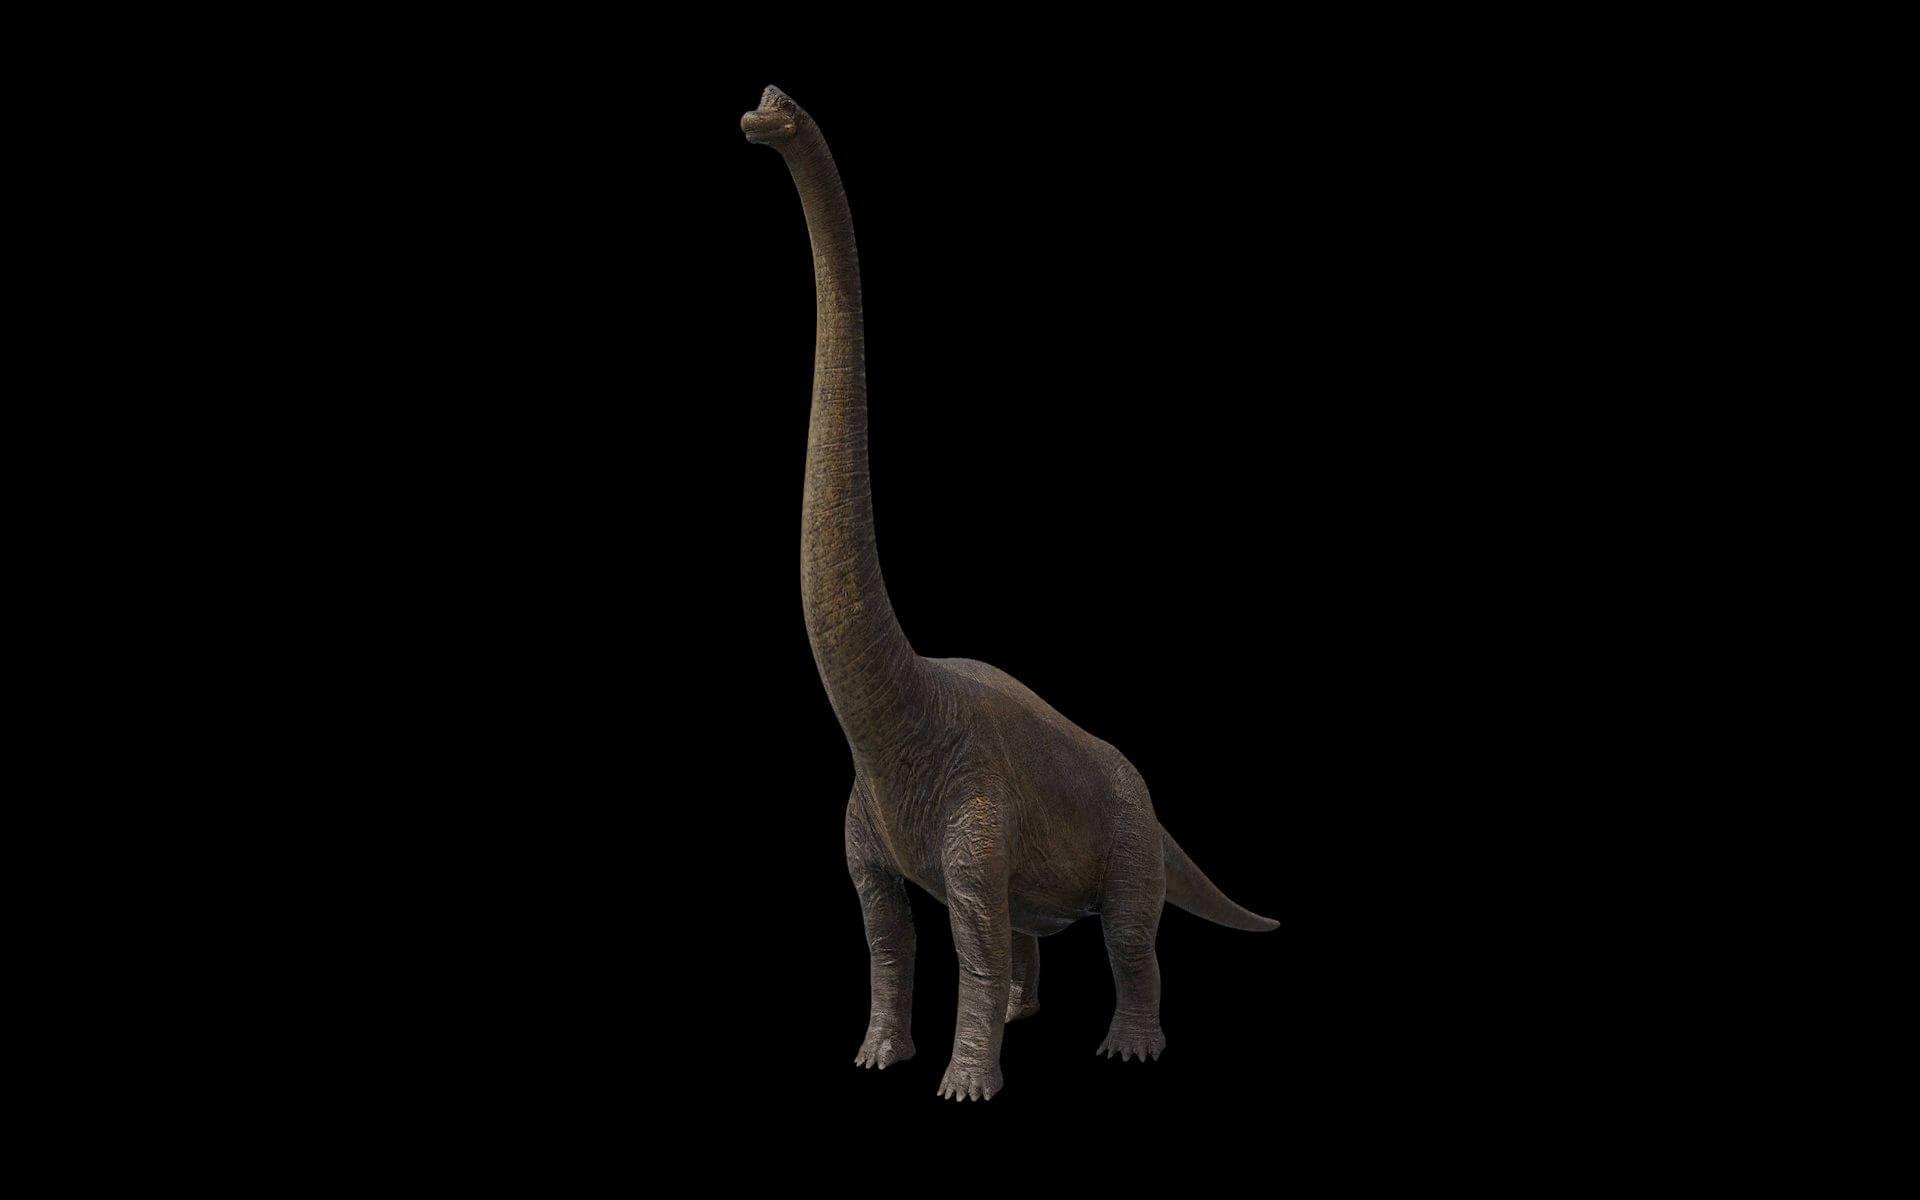 Brachiosaurus 3D Model